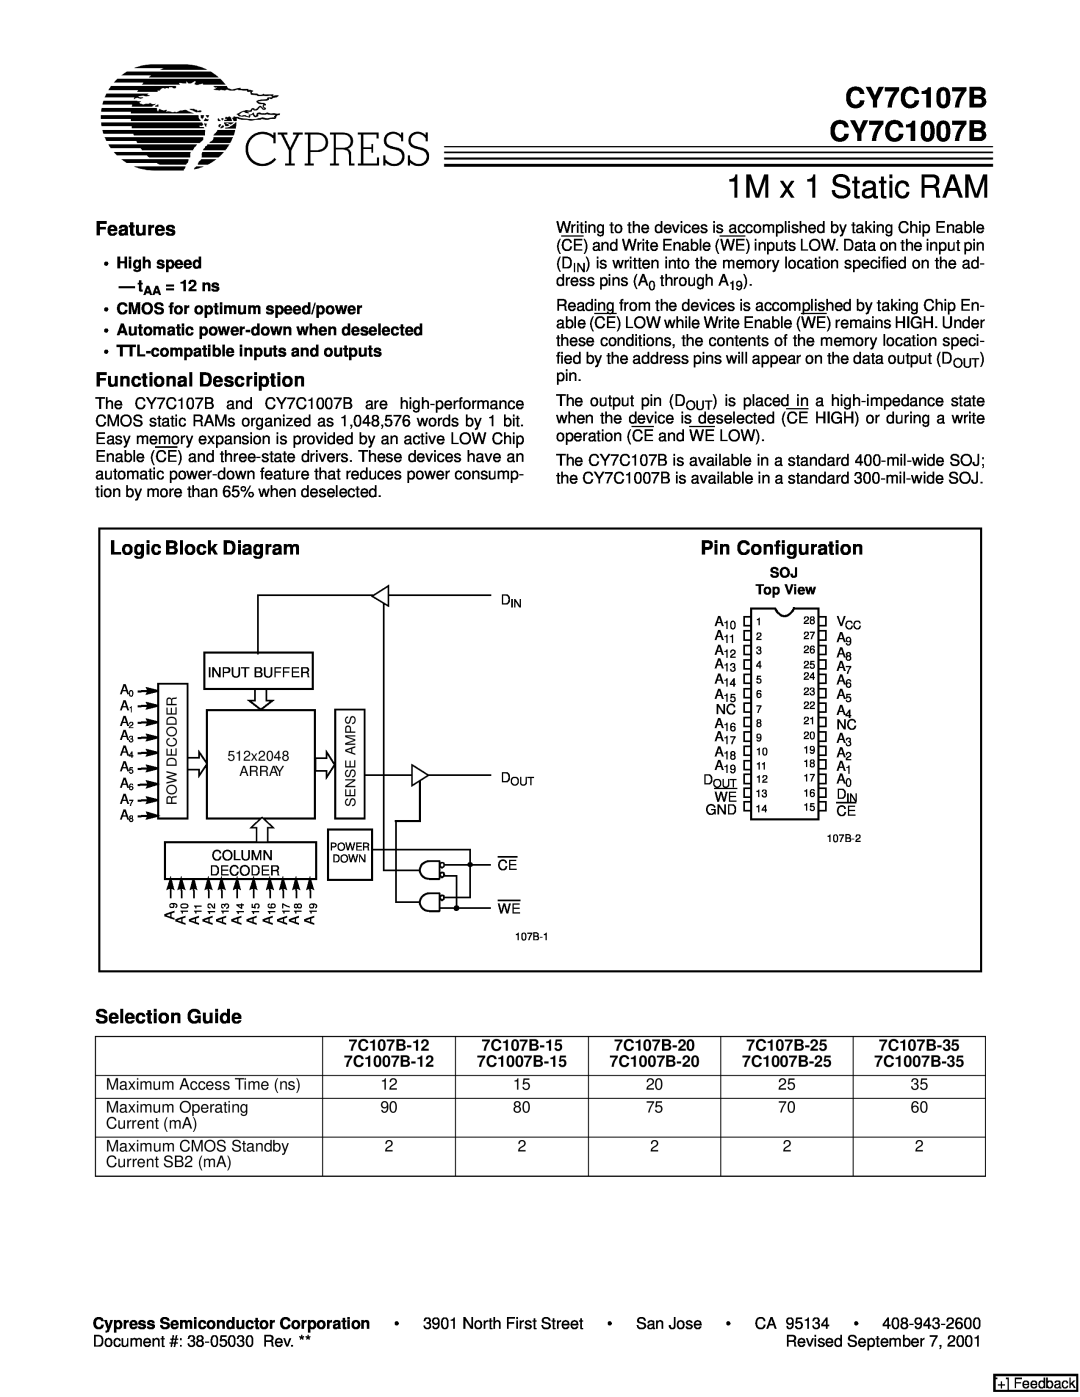 Cypress CY7C1007B manual Features, Functional Description, Logic Block Diagram, Pin Configuration, Selection Guide 